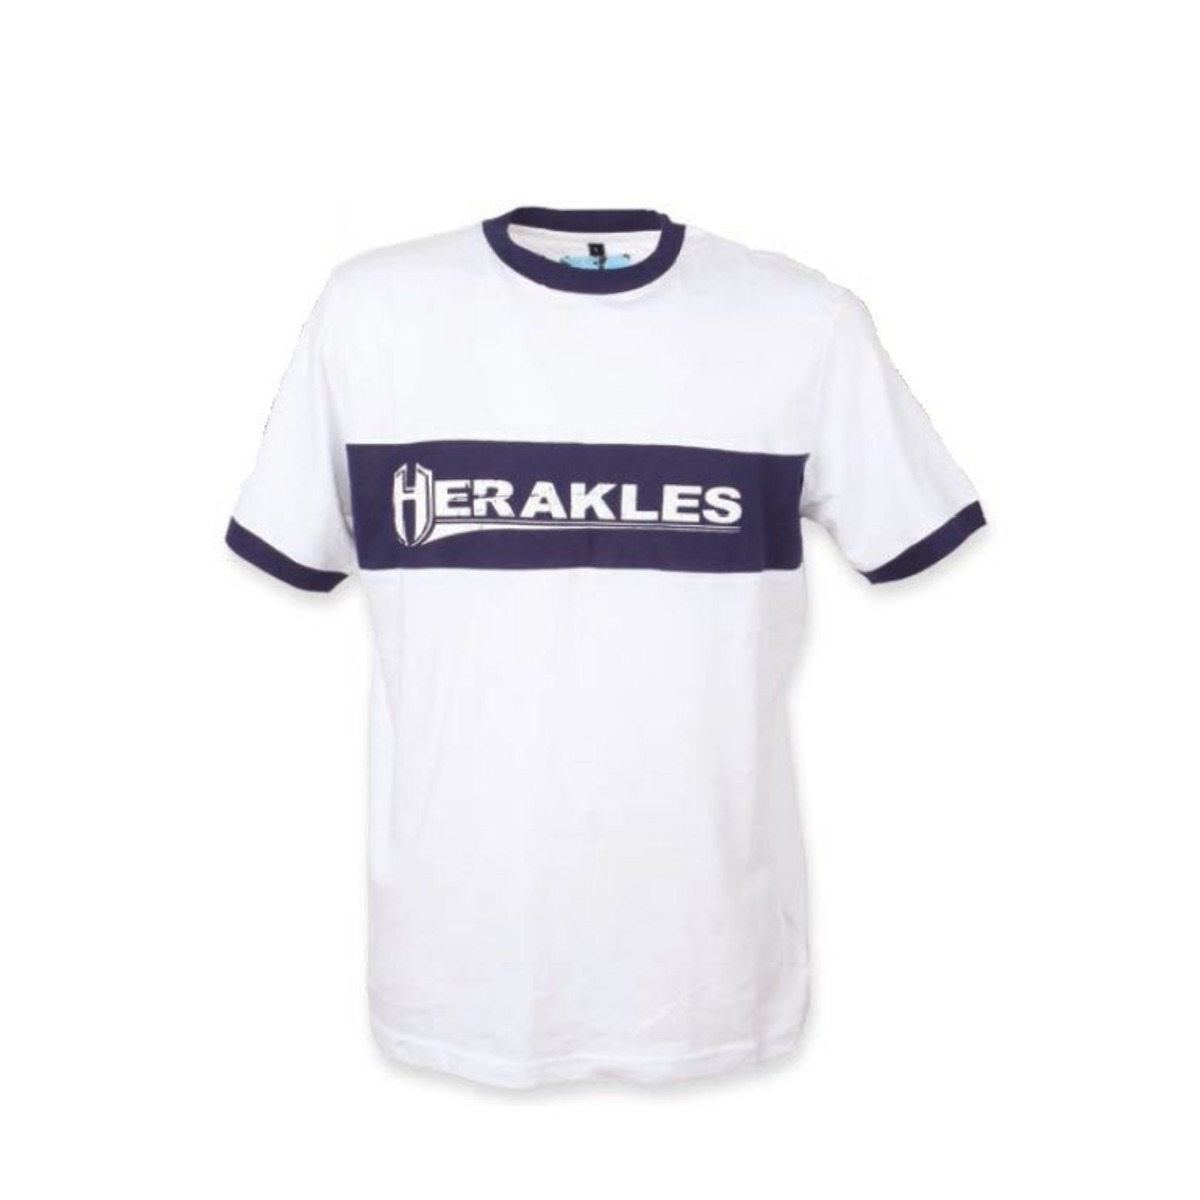 Herakles T-Shirt Blanc-Bleu - XL